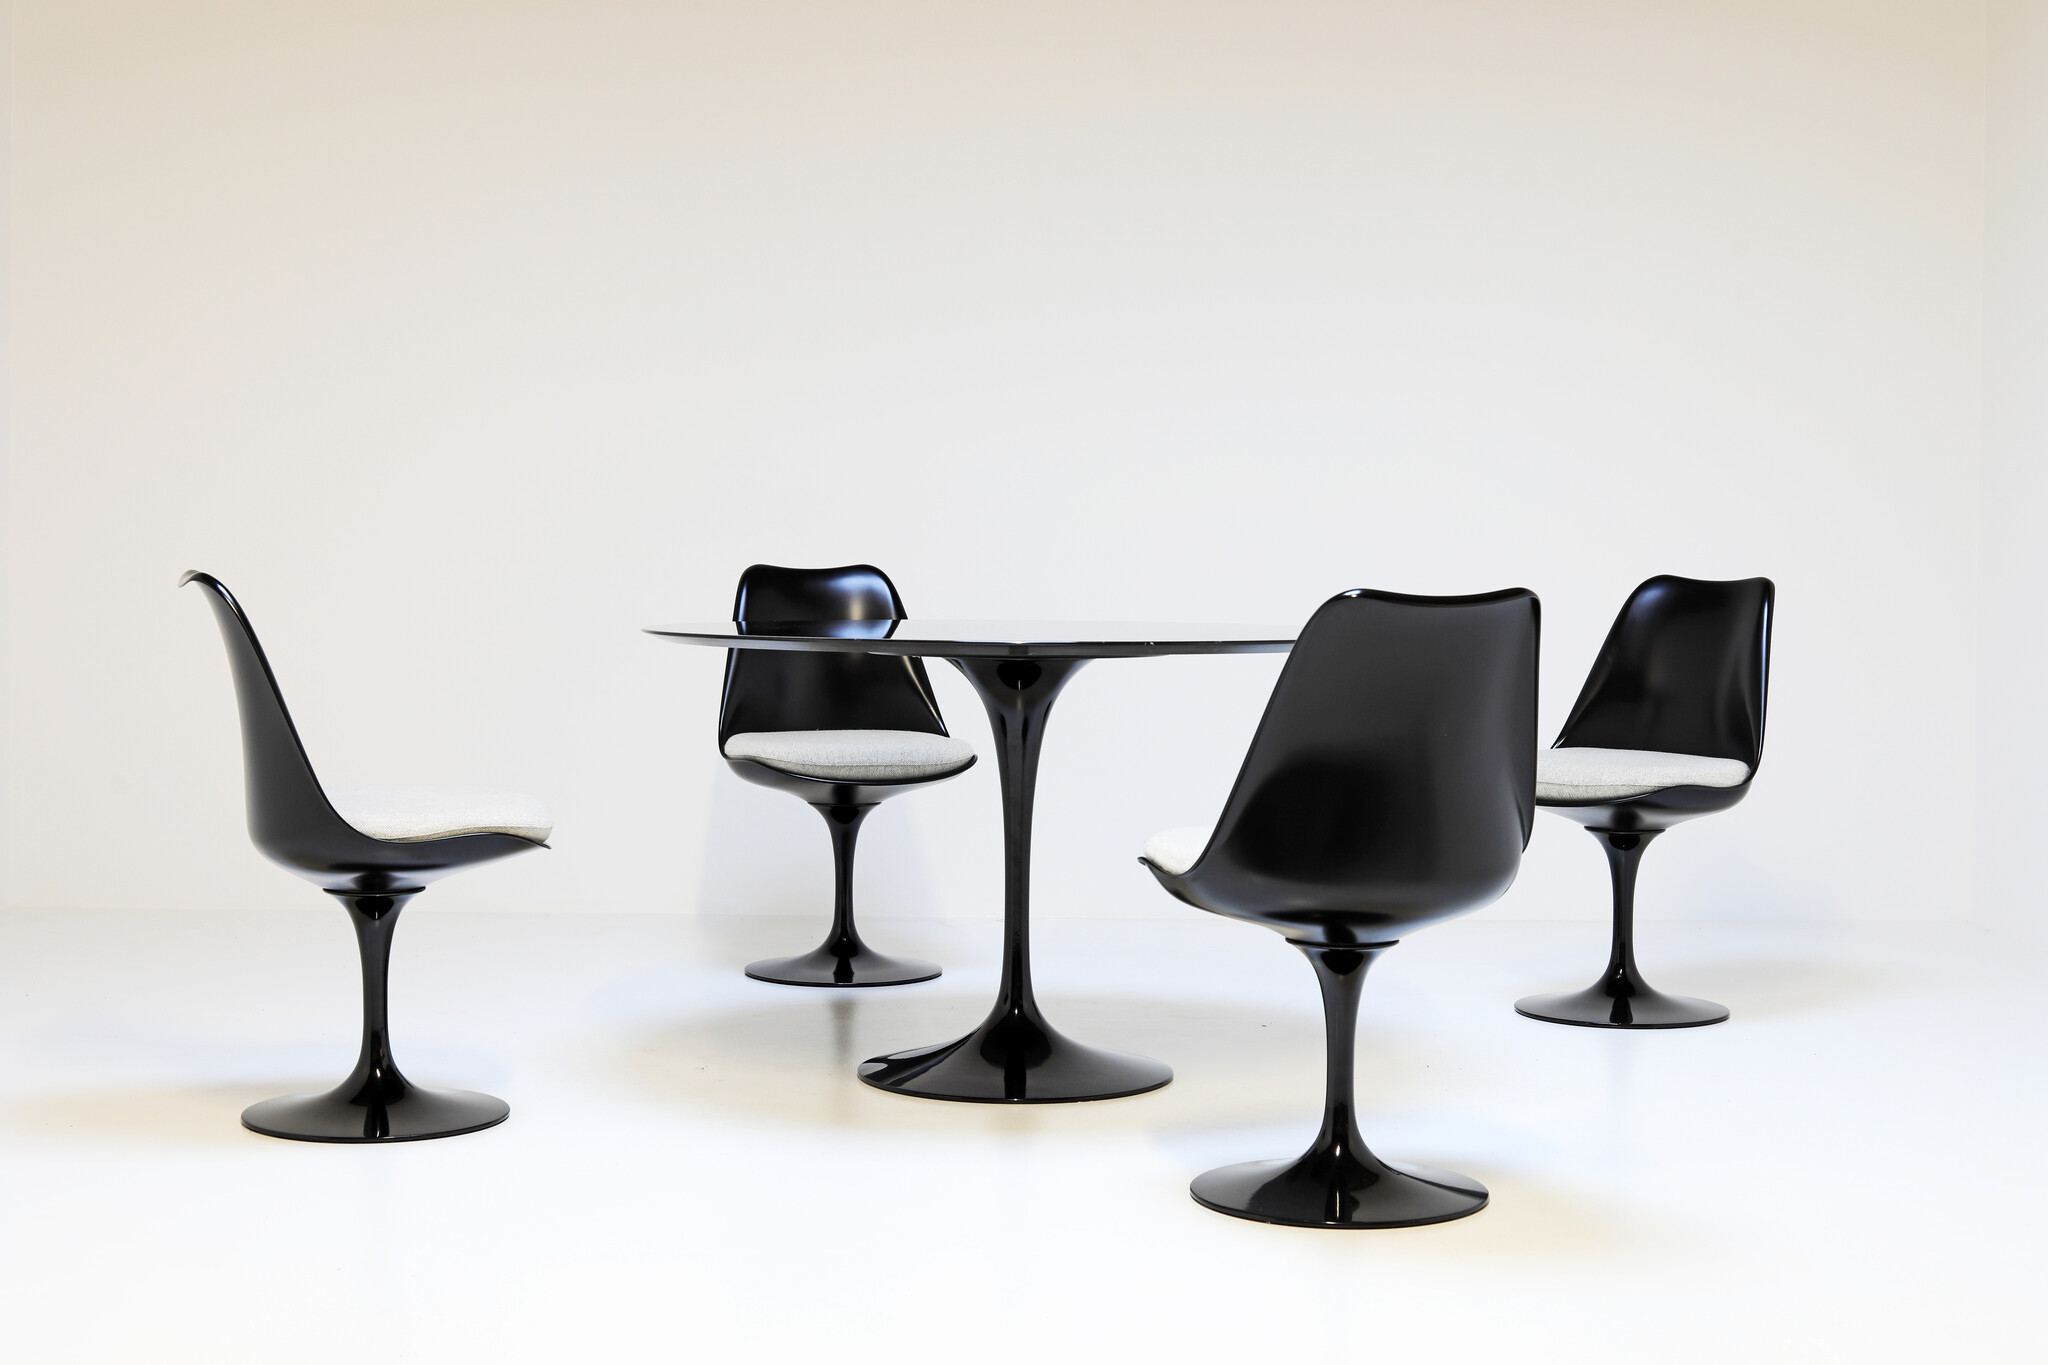 Tulip chairs by Eero Saarinen for Knoll International